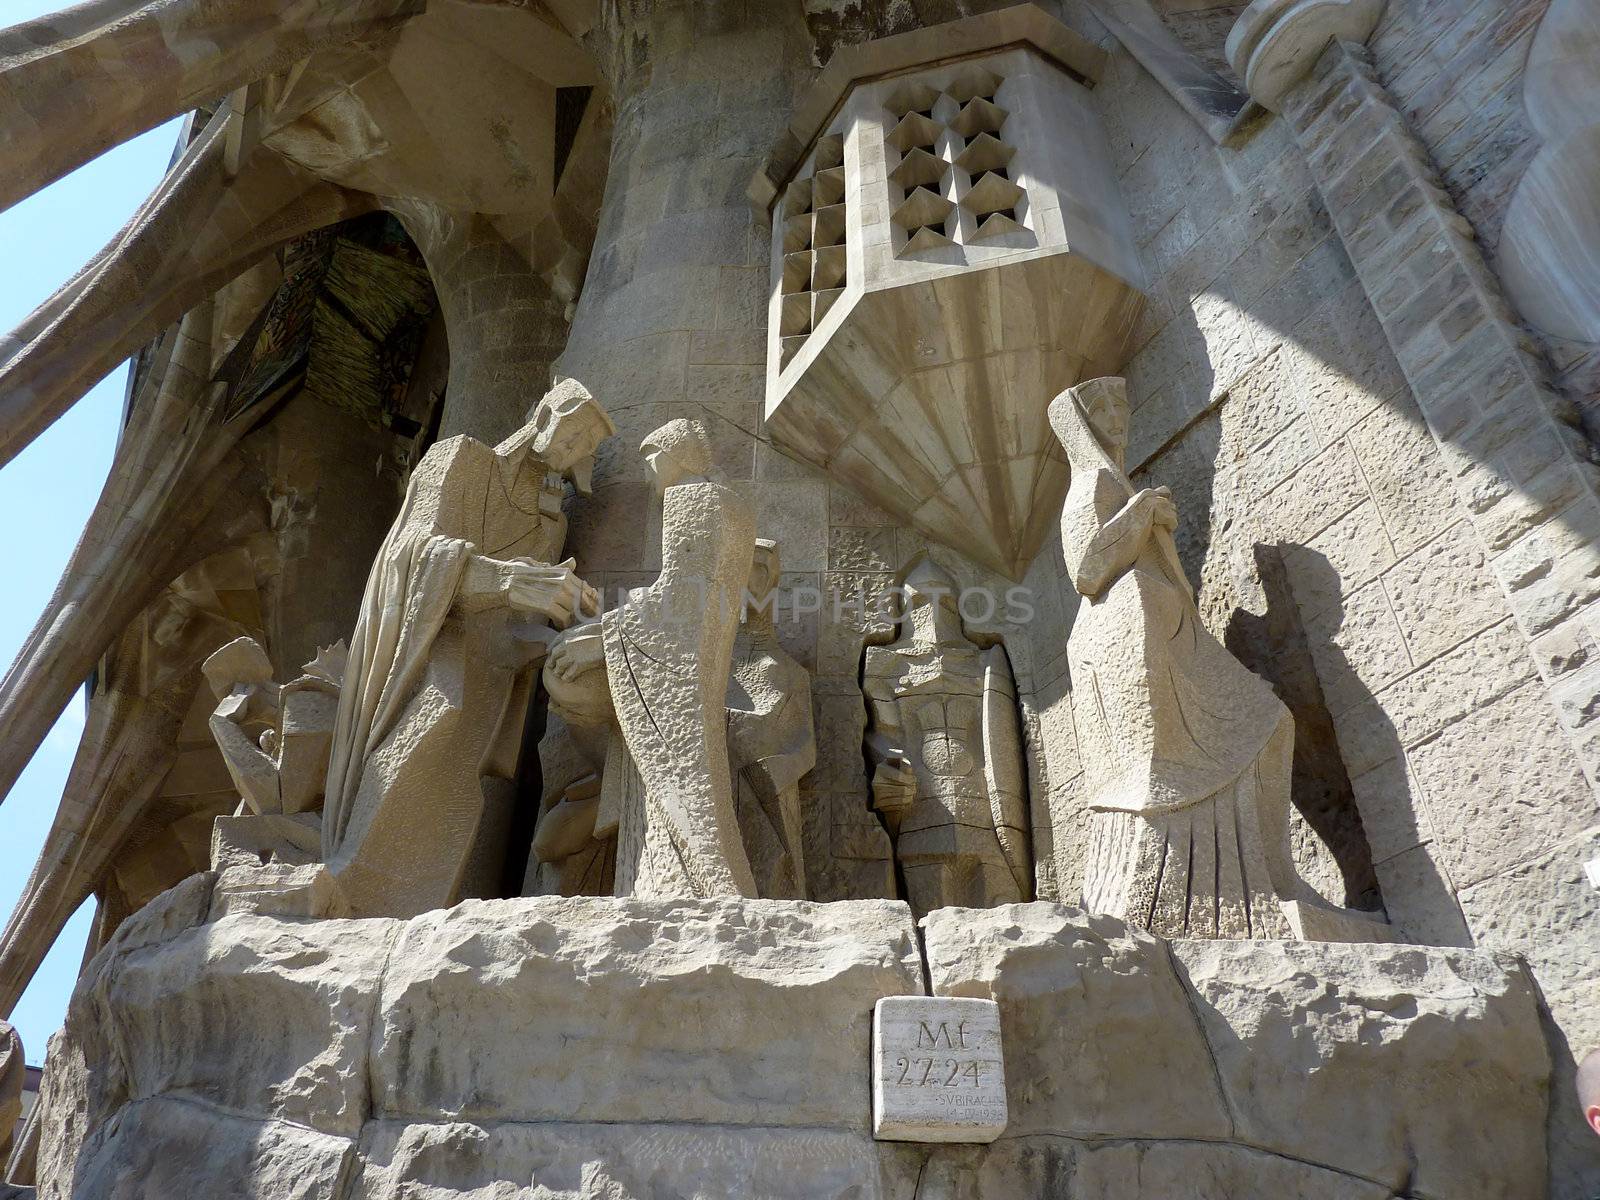 Sculptures of the Sagrada familia church, Barcelona, Spain by Elenaphotos21